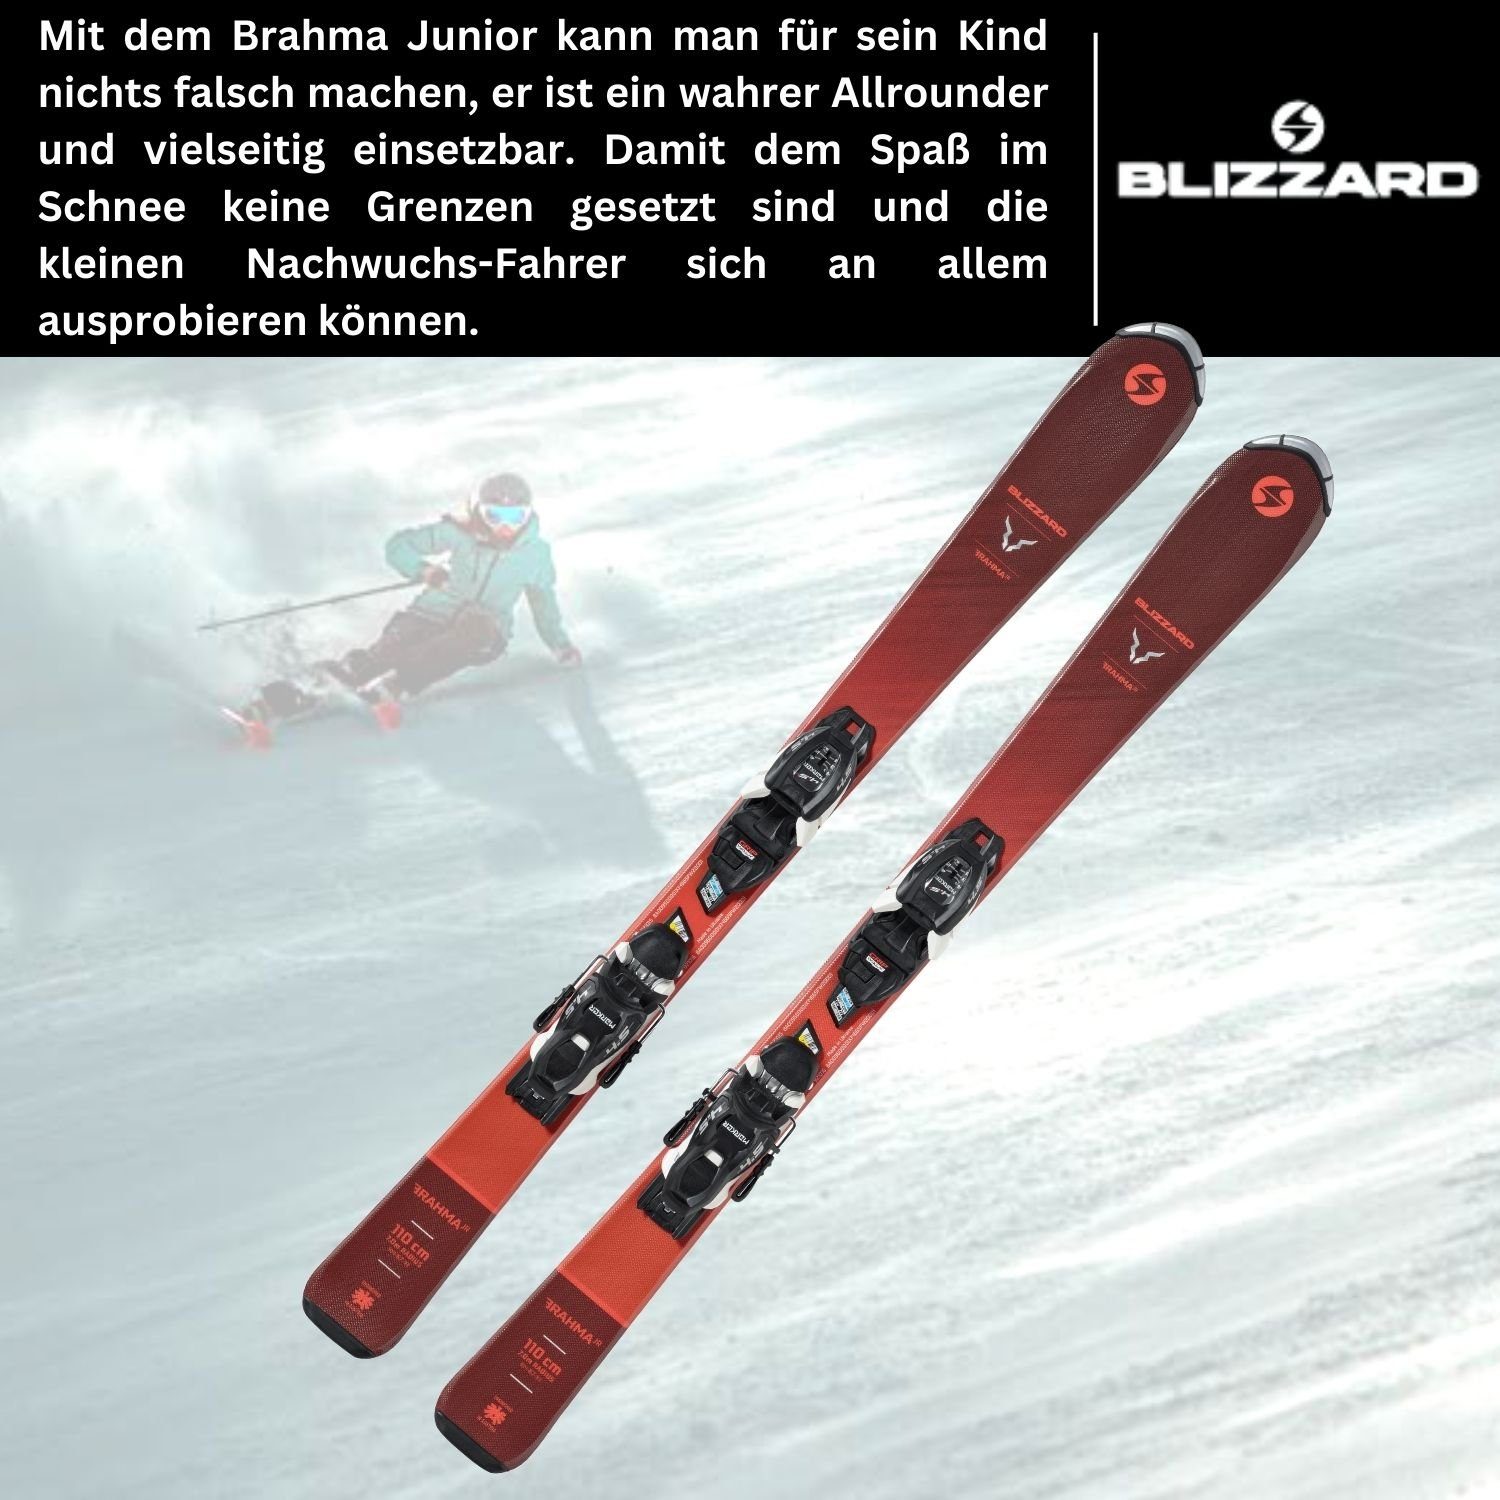 Ski, Ski + /7.0 Brahma Bindung 2024 JR Blizzard Kinderski JR4.5 BLIZZARD FDT